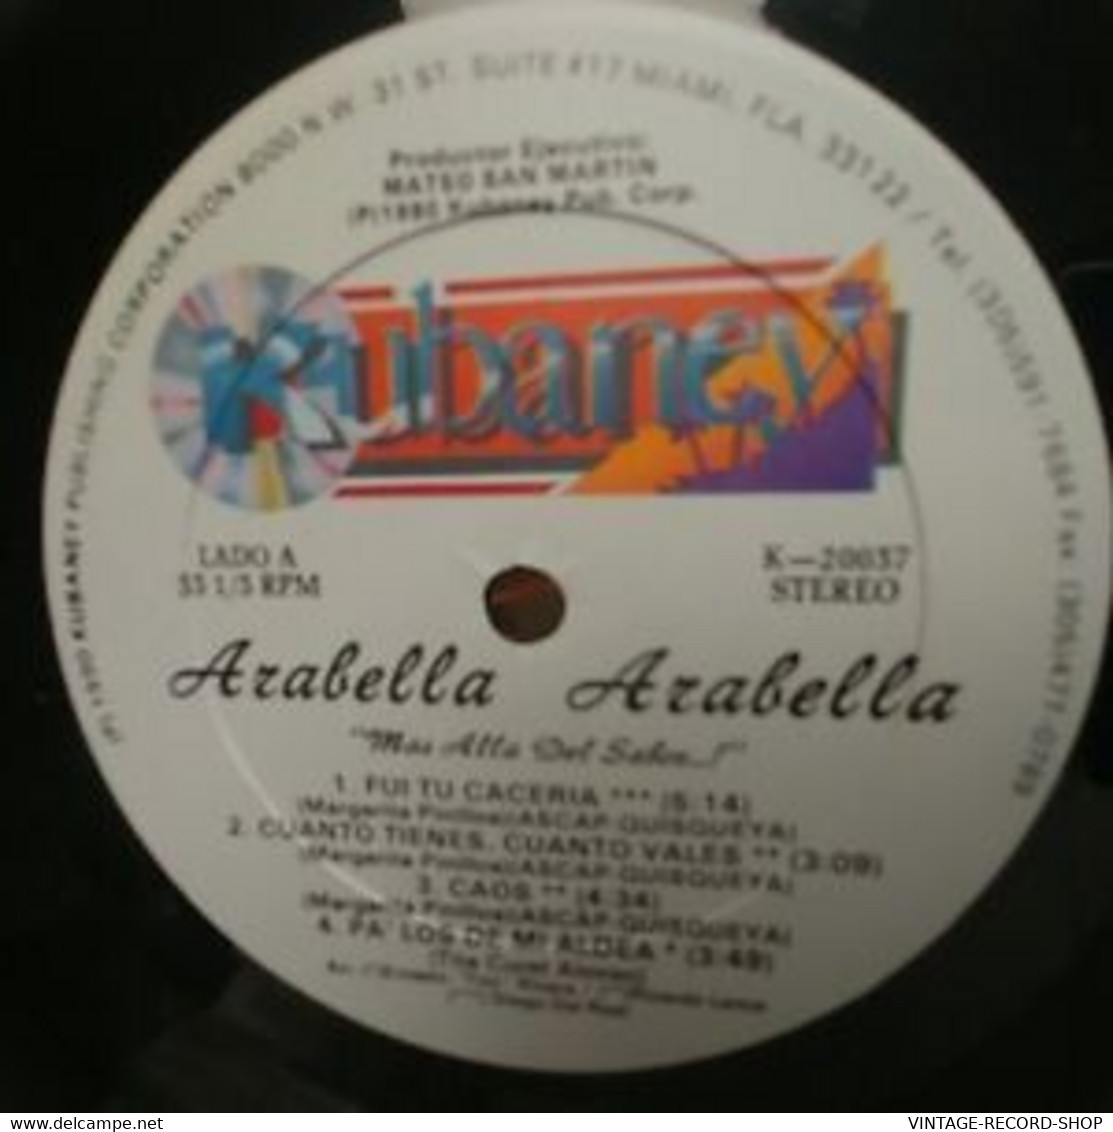 ARABELLA-MAS ALLA DEL SABOR - Other - Spanish Music